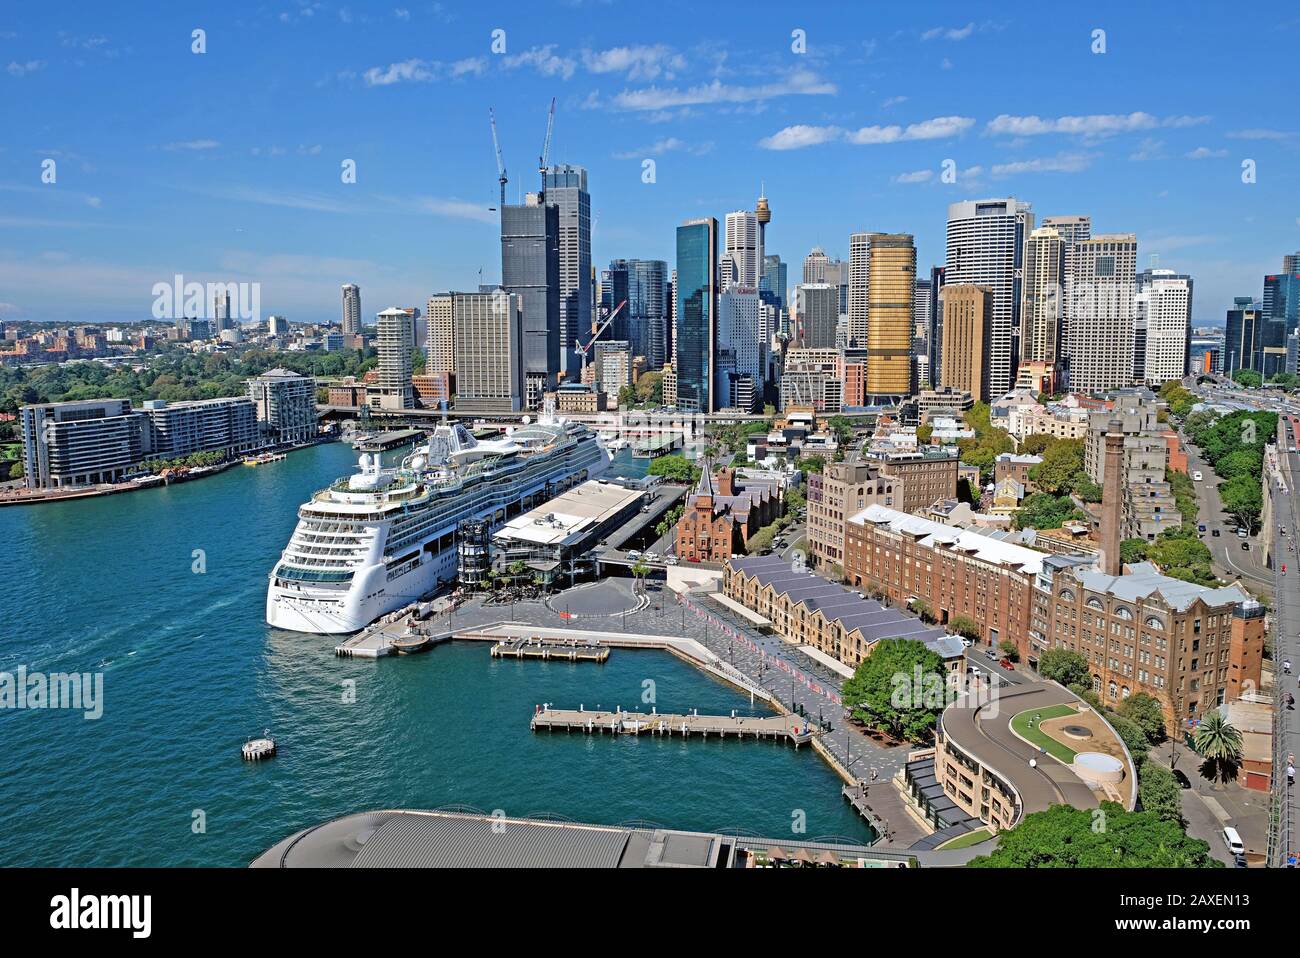 Sydney Australia - 23 marzo 2019: Splendida vista panoramica su Circular Quay, enorme nave da crociera nel terminal internazionale, Rocks e Sydney City, Austr Foto Stock